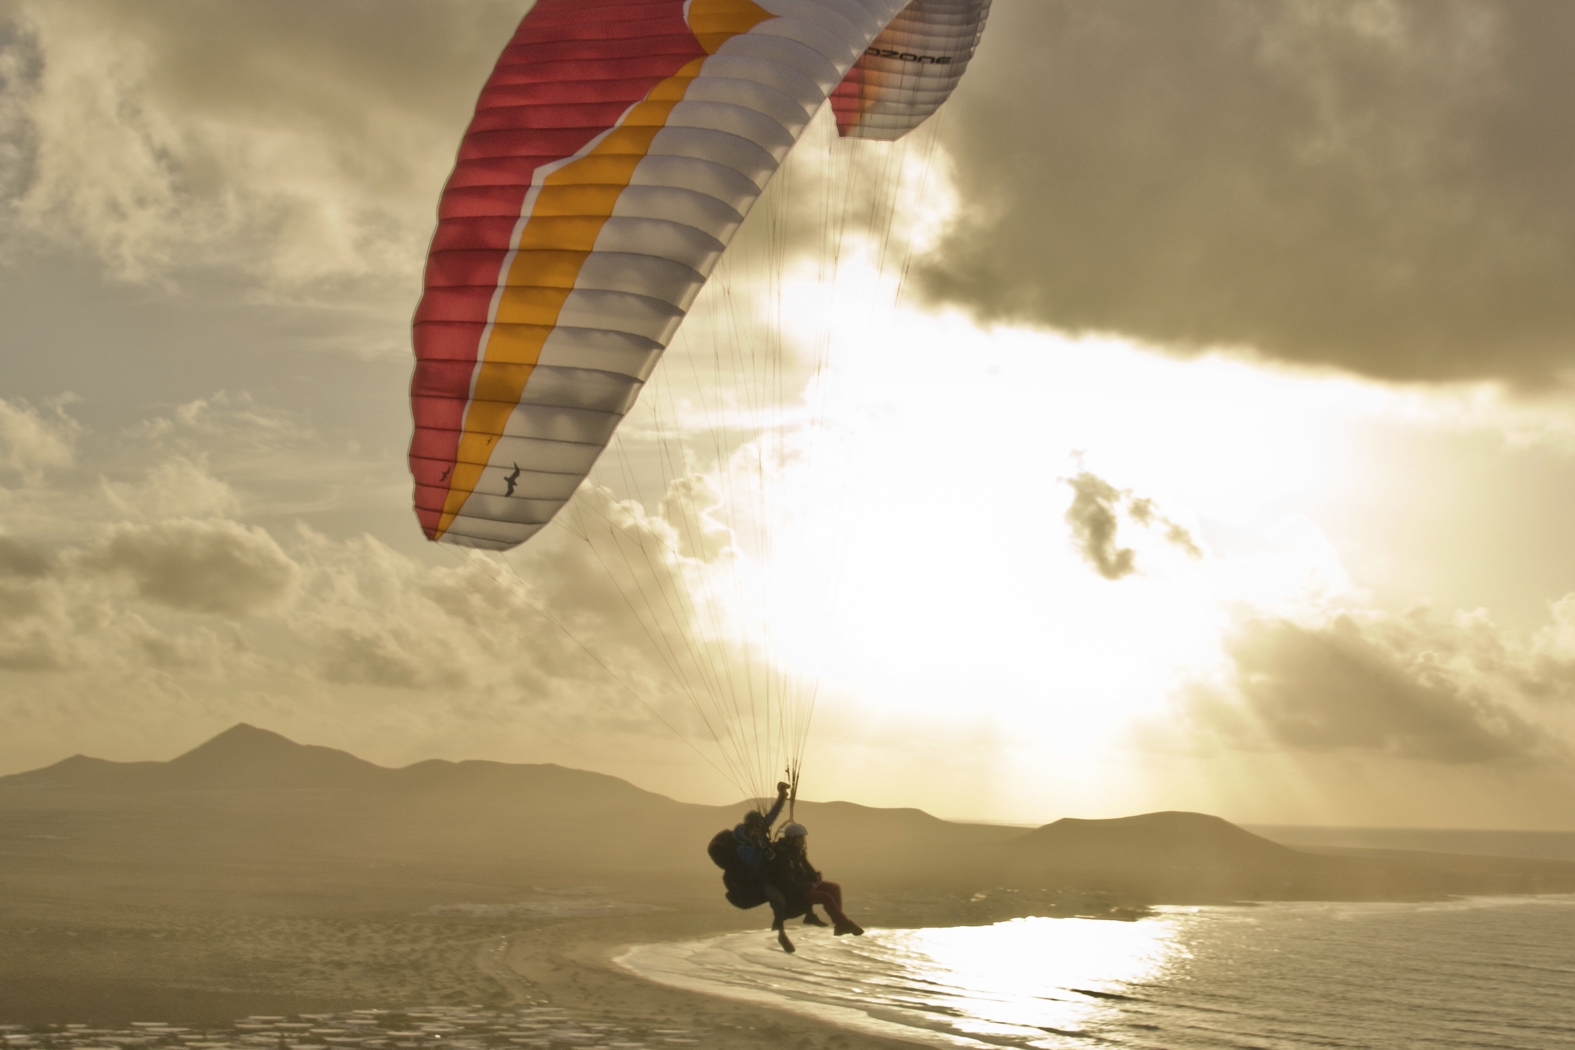 Famaraiso paragliding